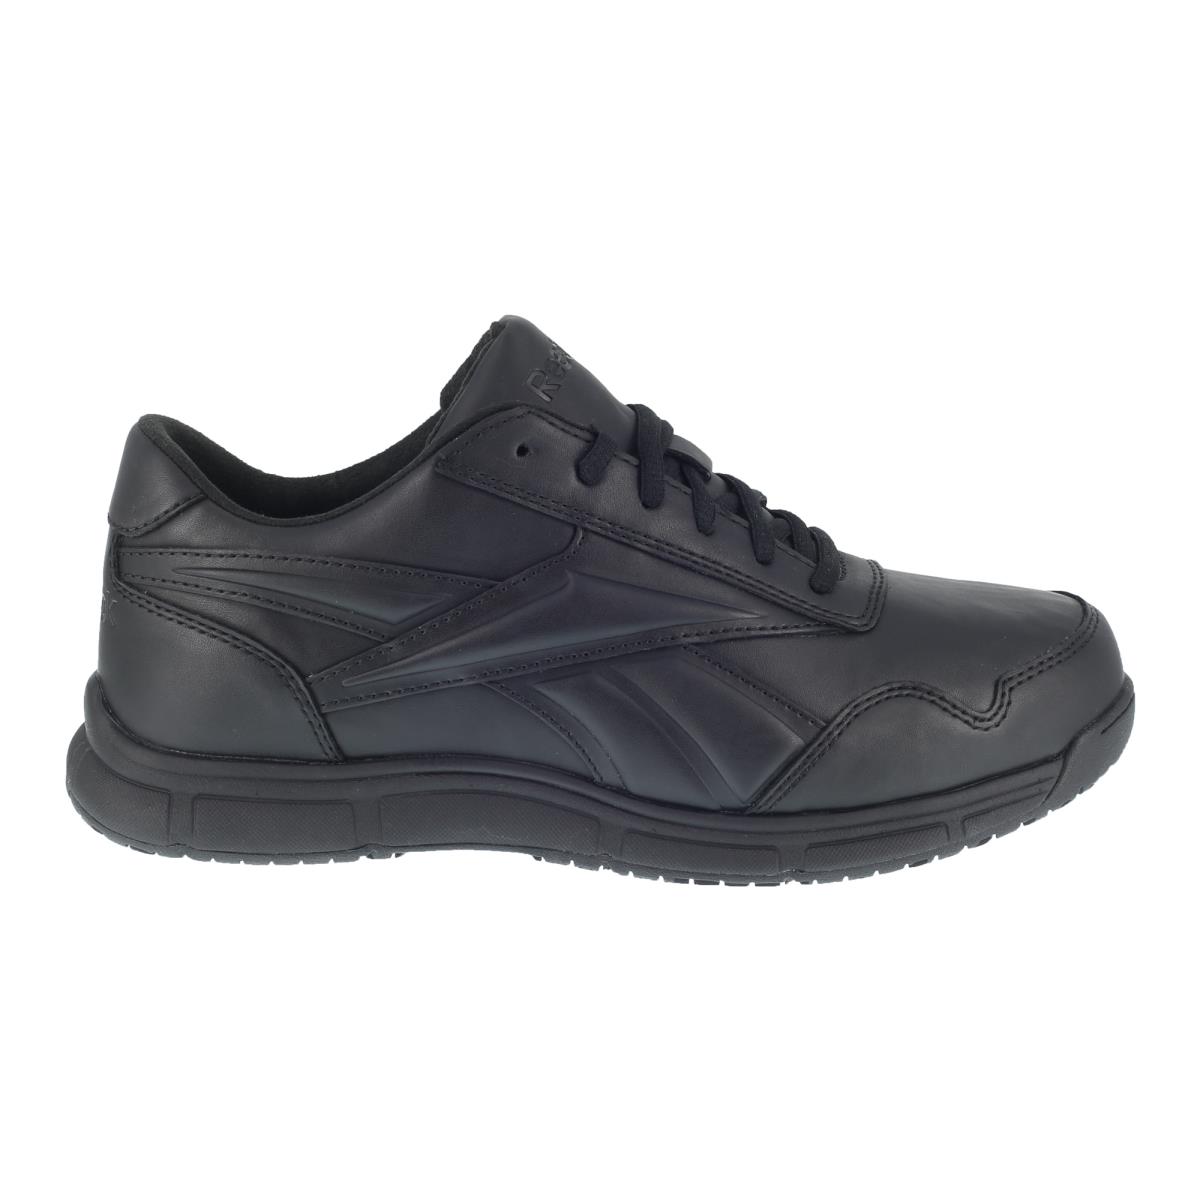 Reebok Mens Black Leather Work Shoes Jorie LT SR Oxford M